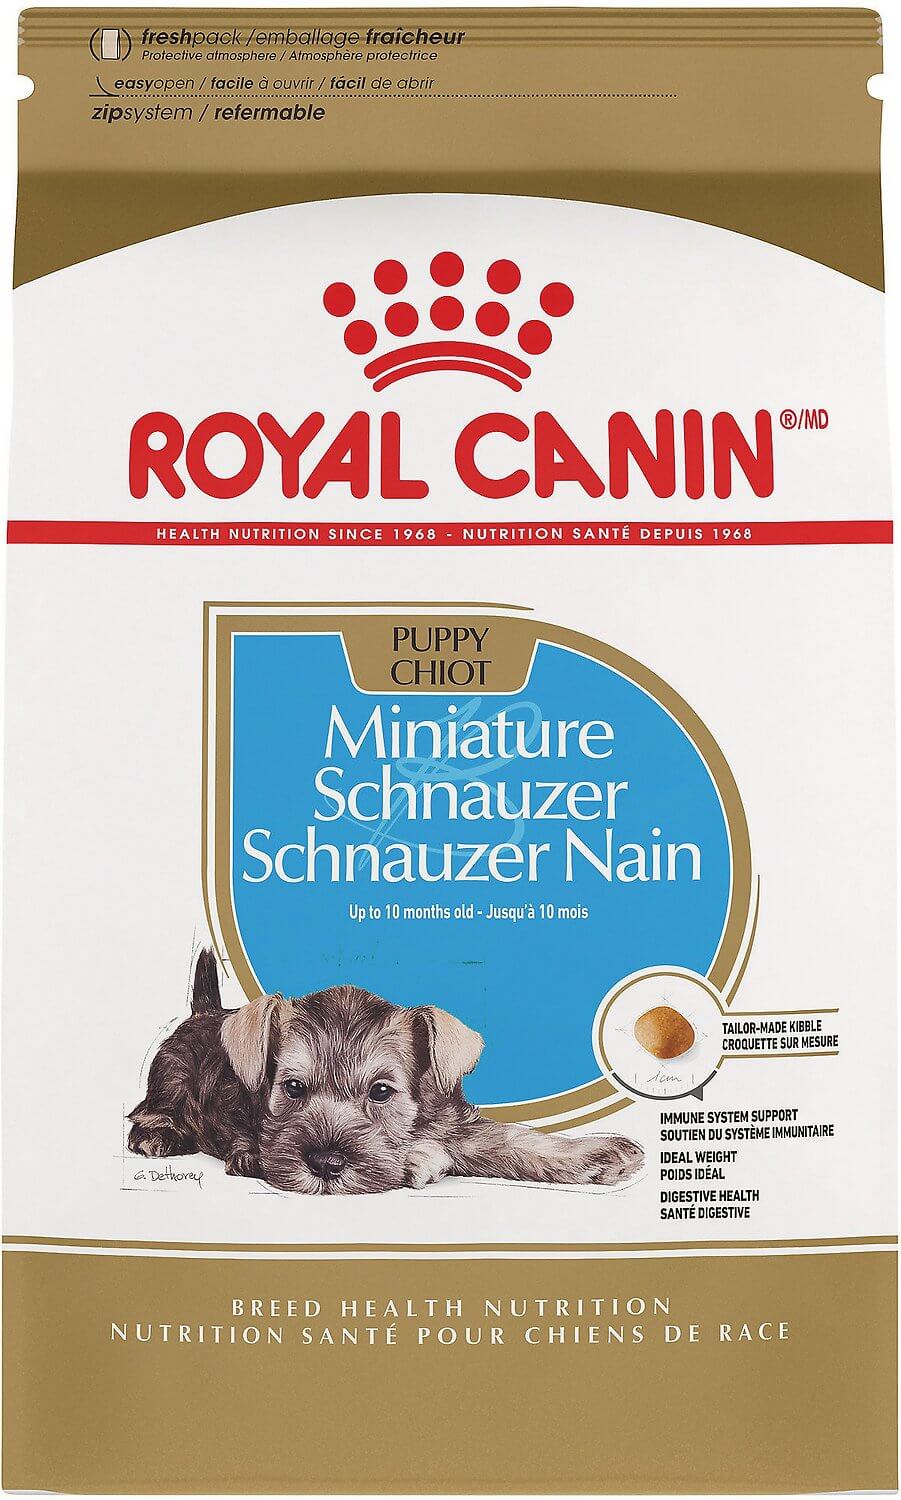 royal canin dog food price